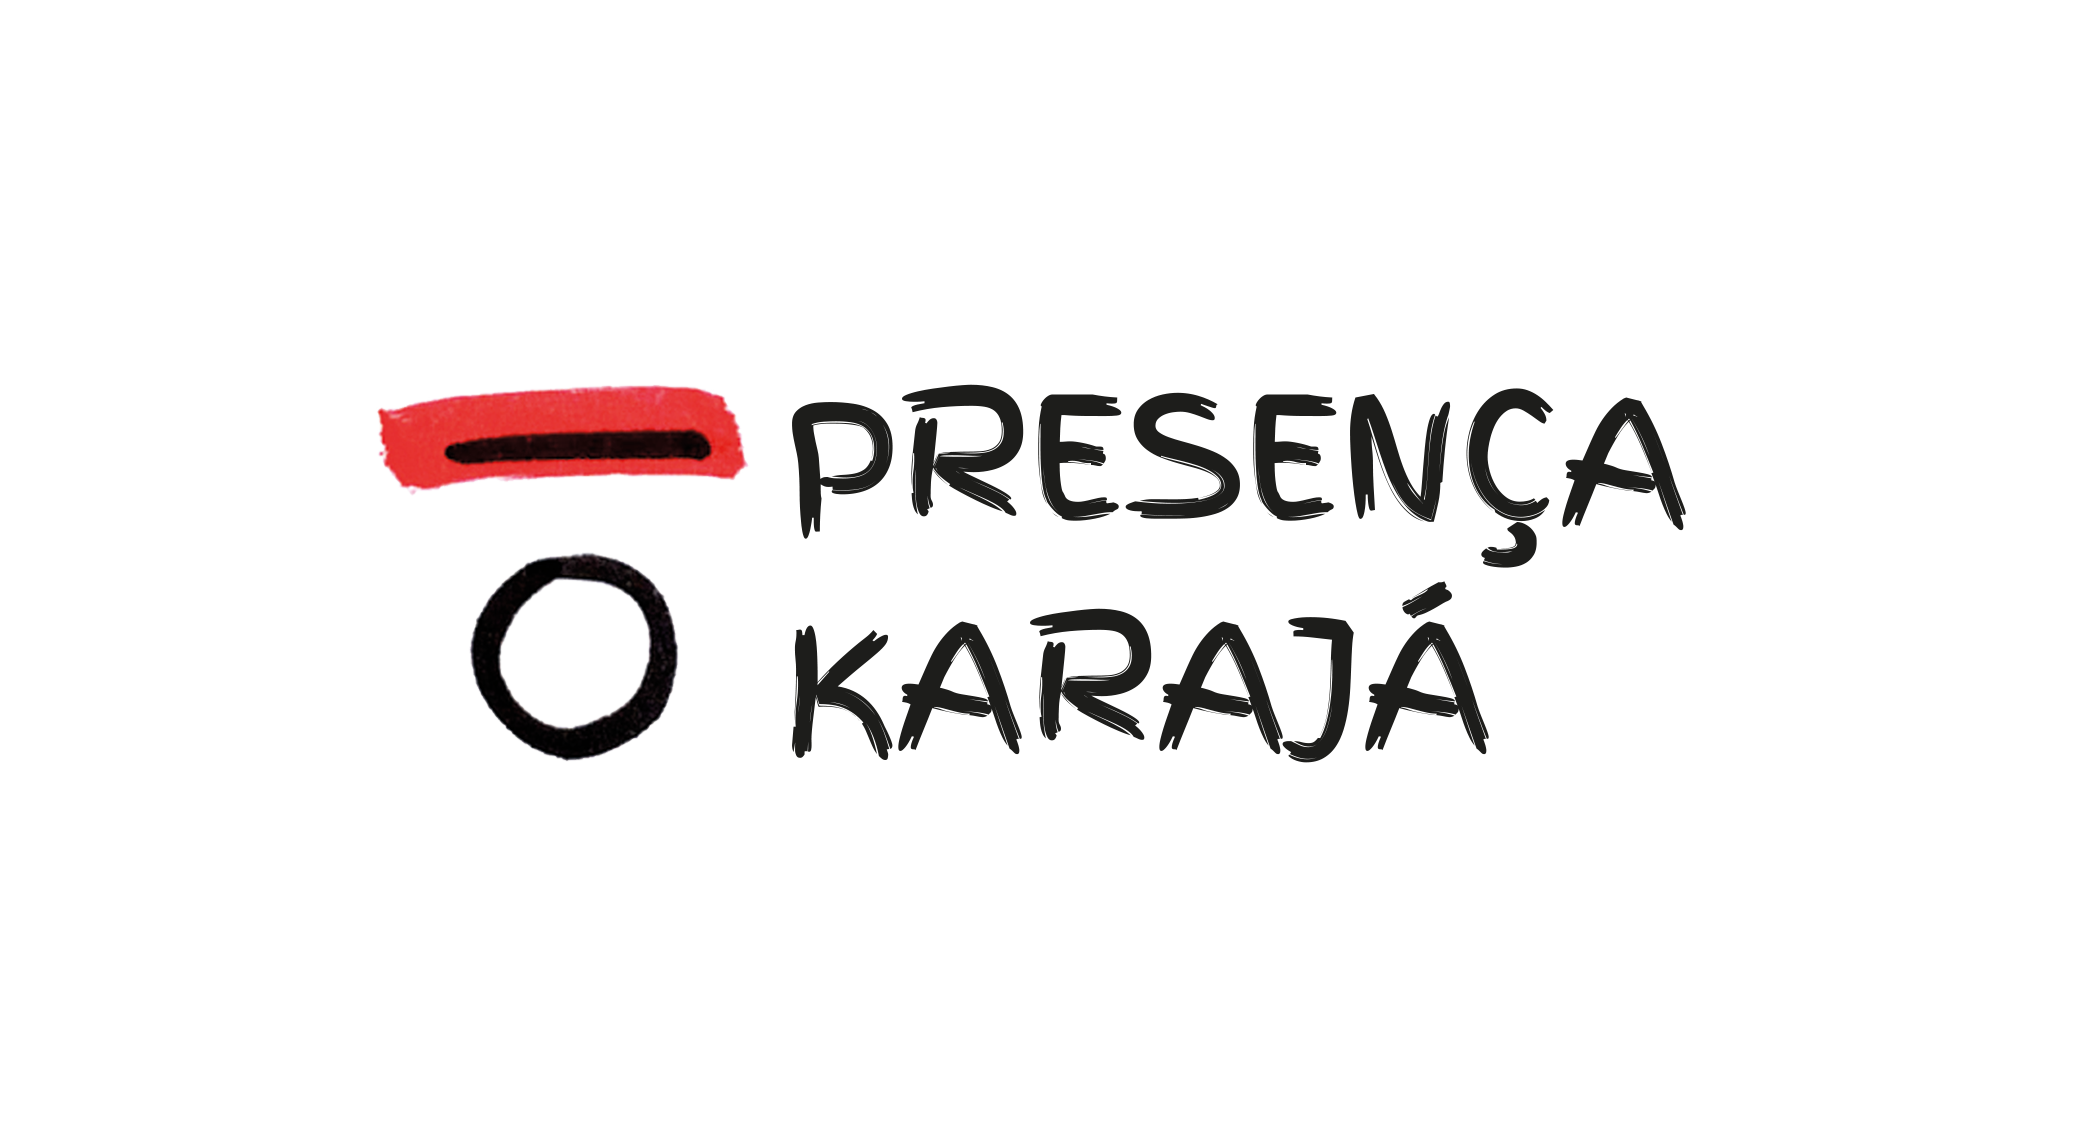 Presença Karajá